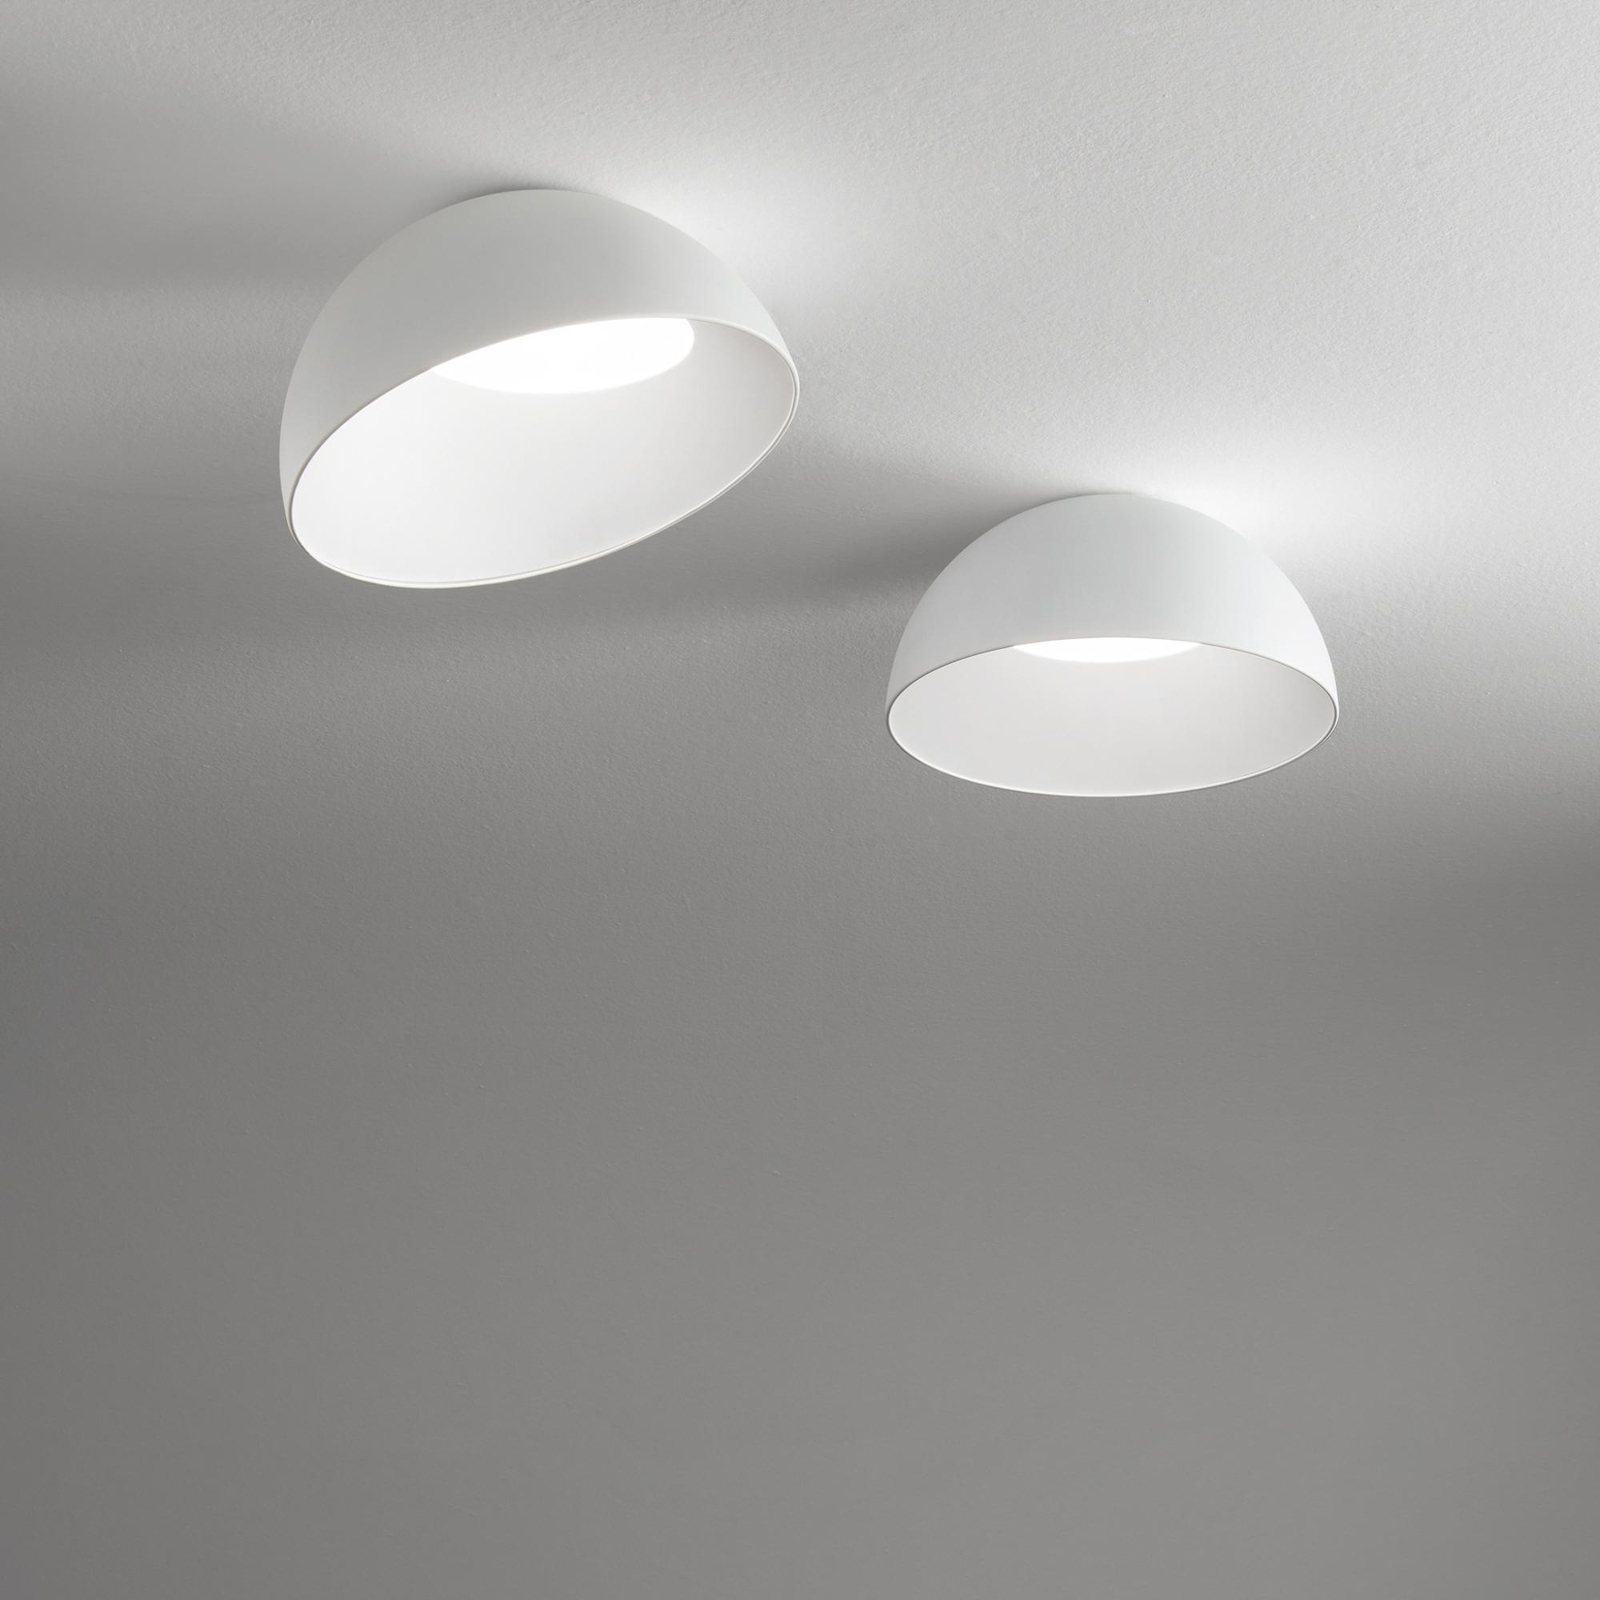 Ideal Lux LED ceiling light Corolla-1, white, metal, Ø 35 cm